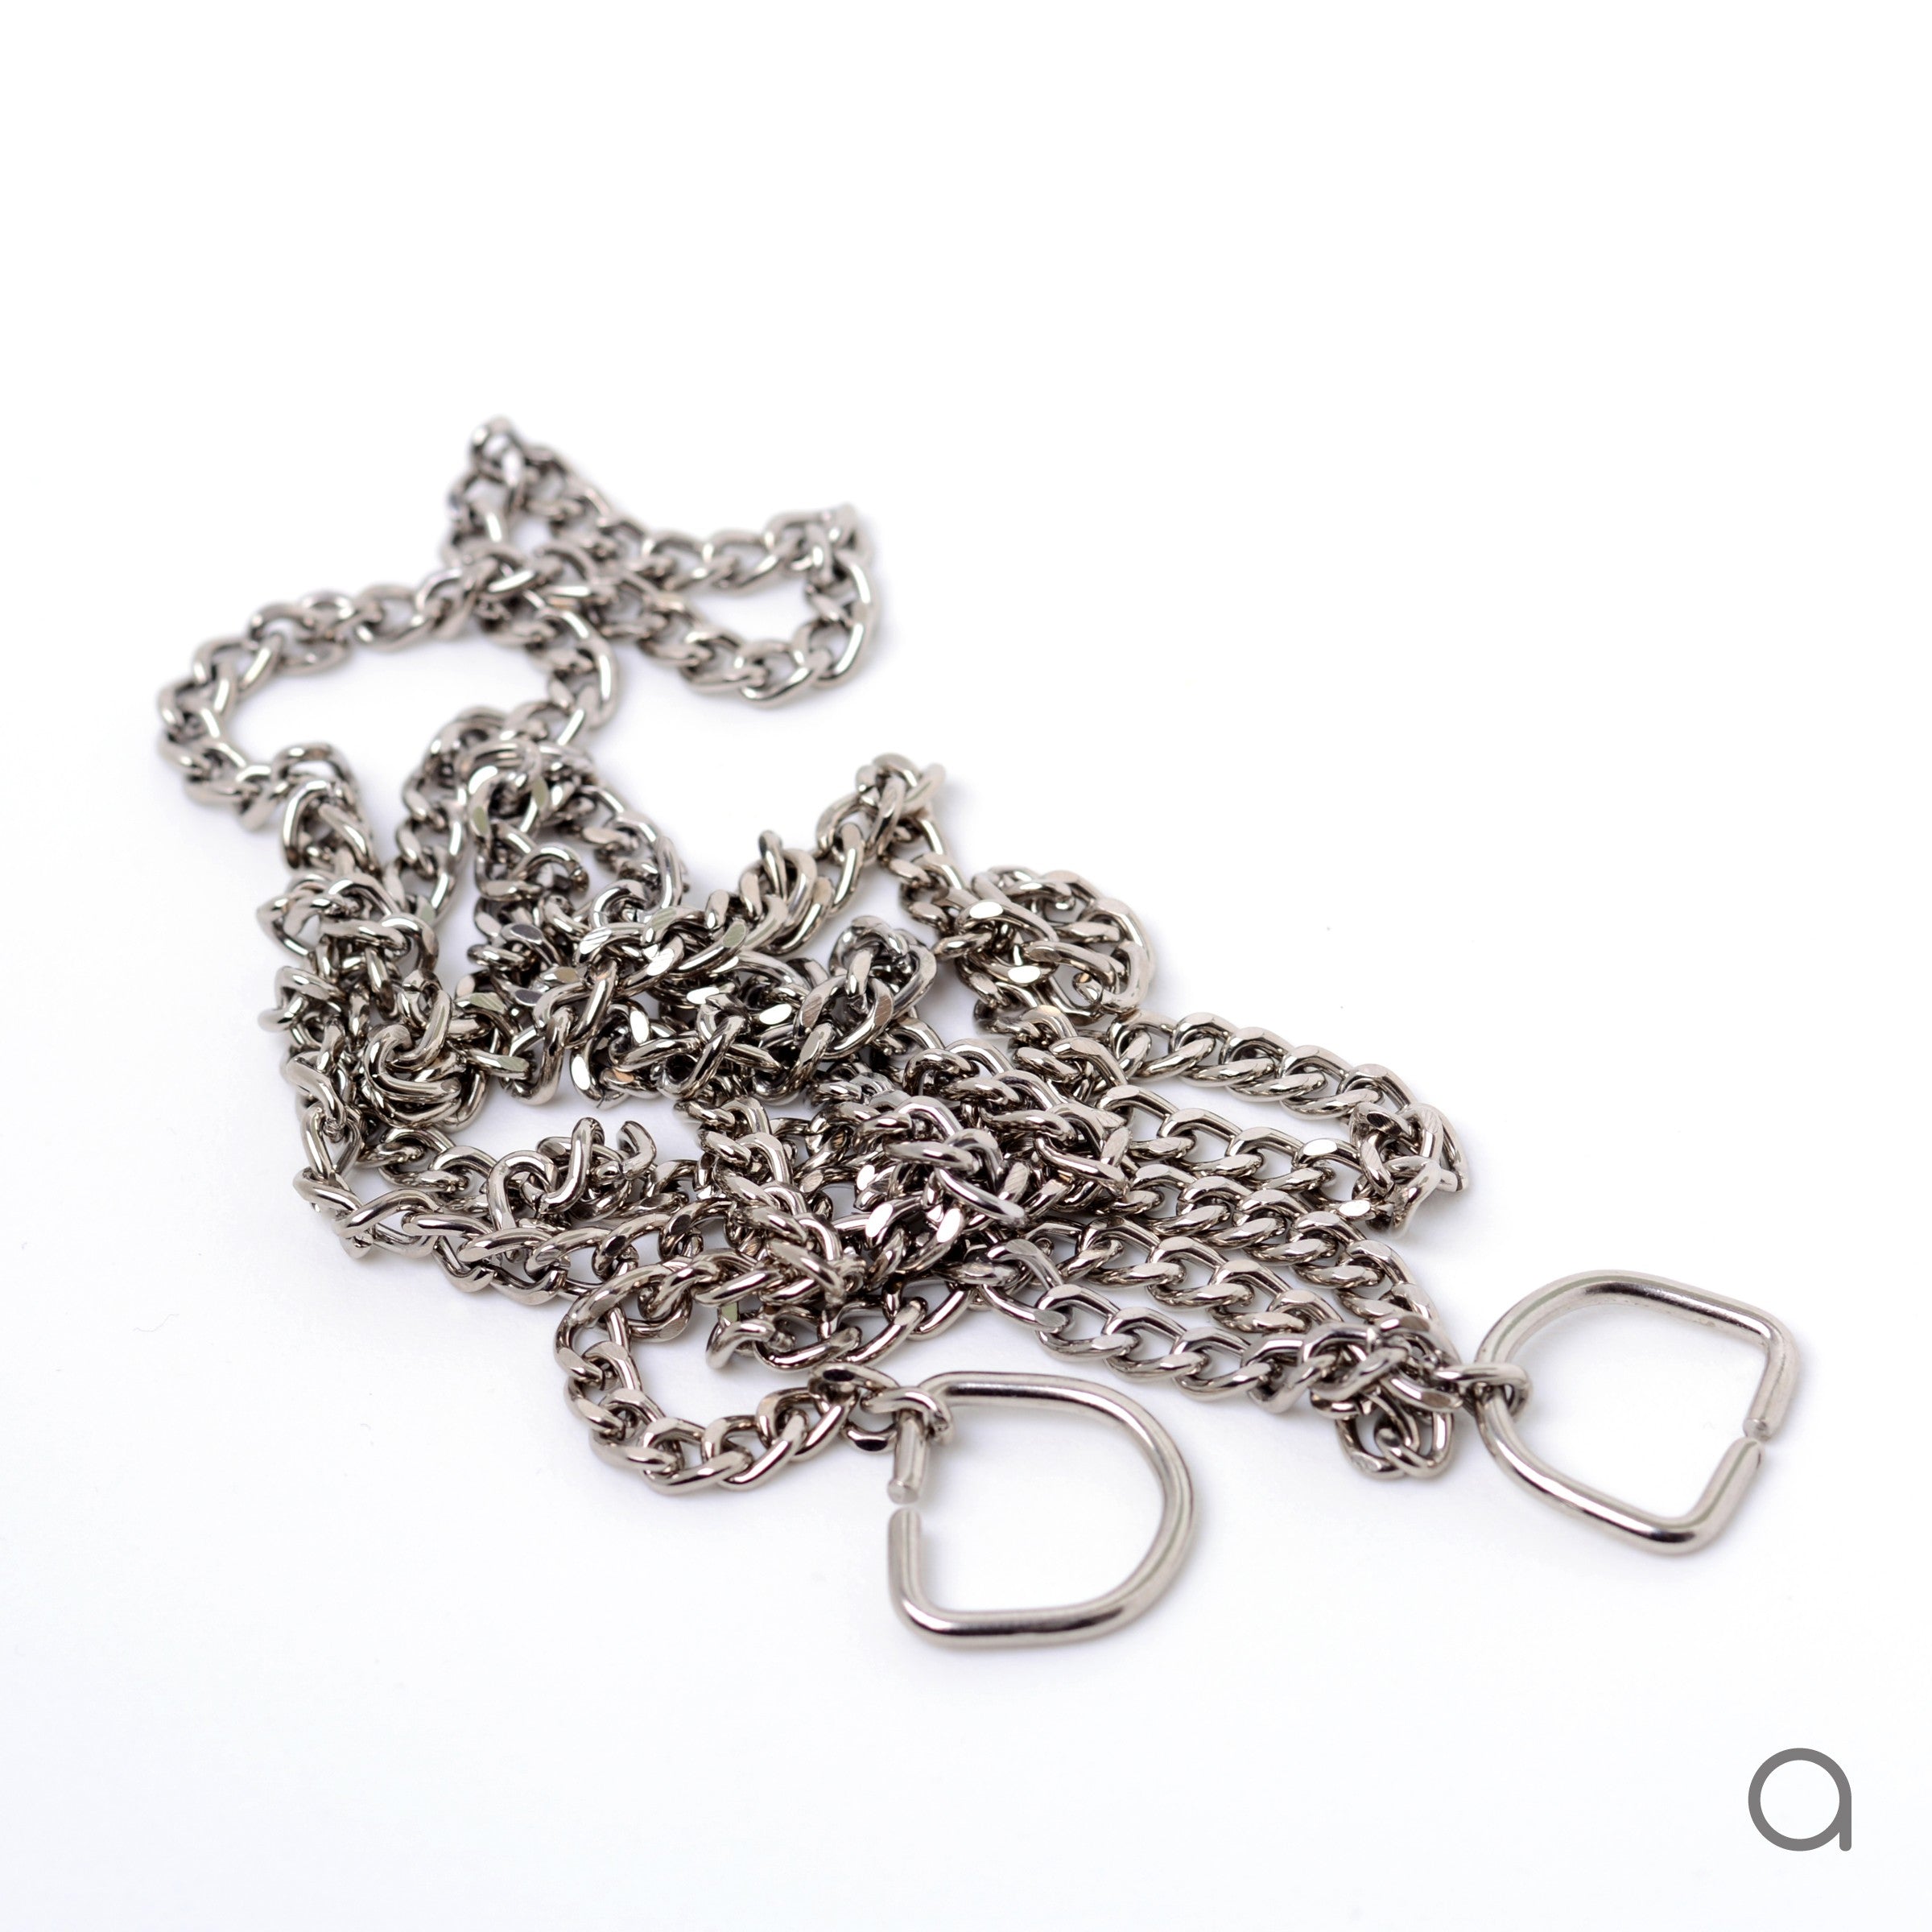 Removable silver color chain - 120 cm